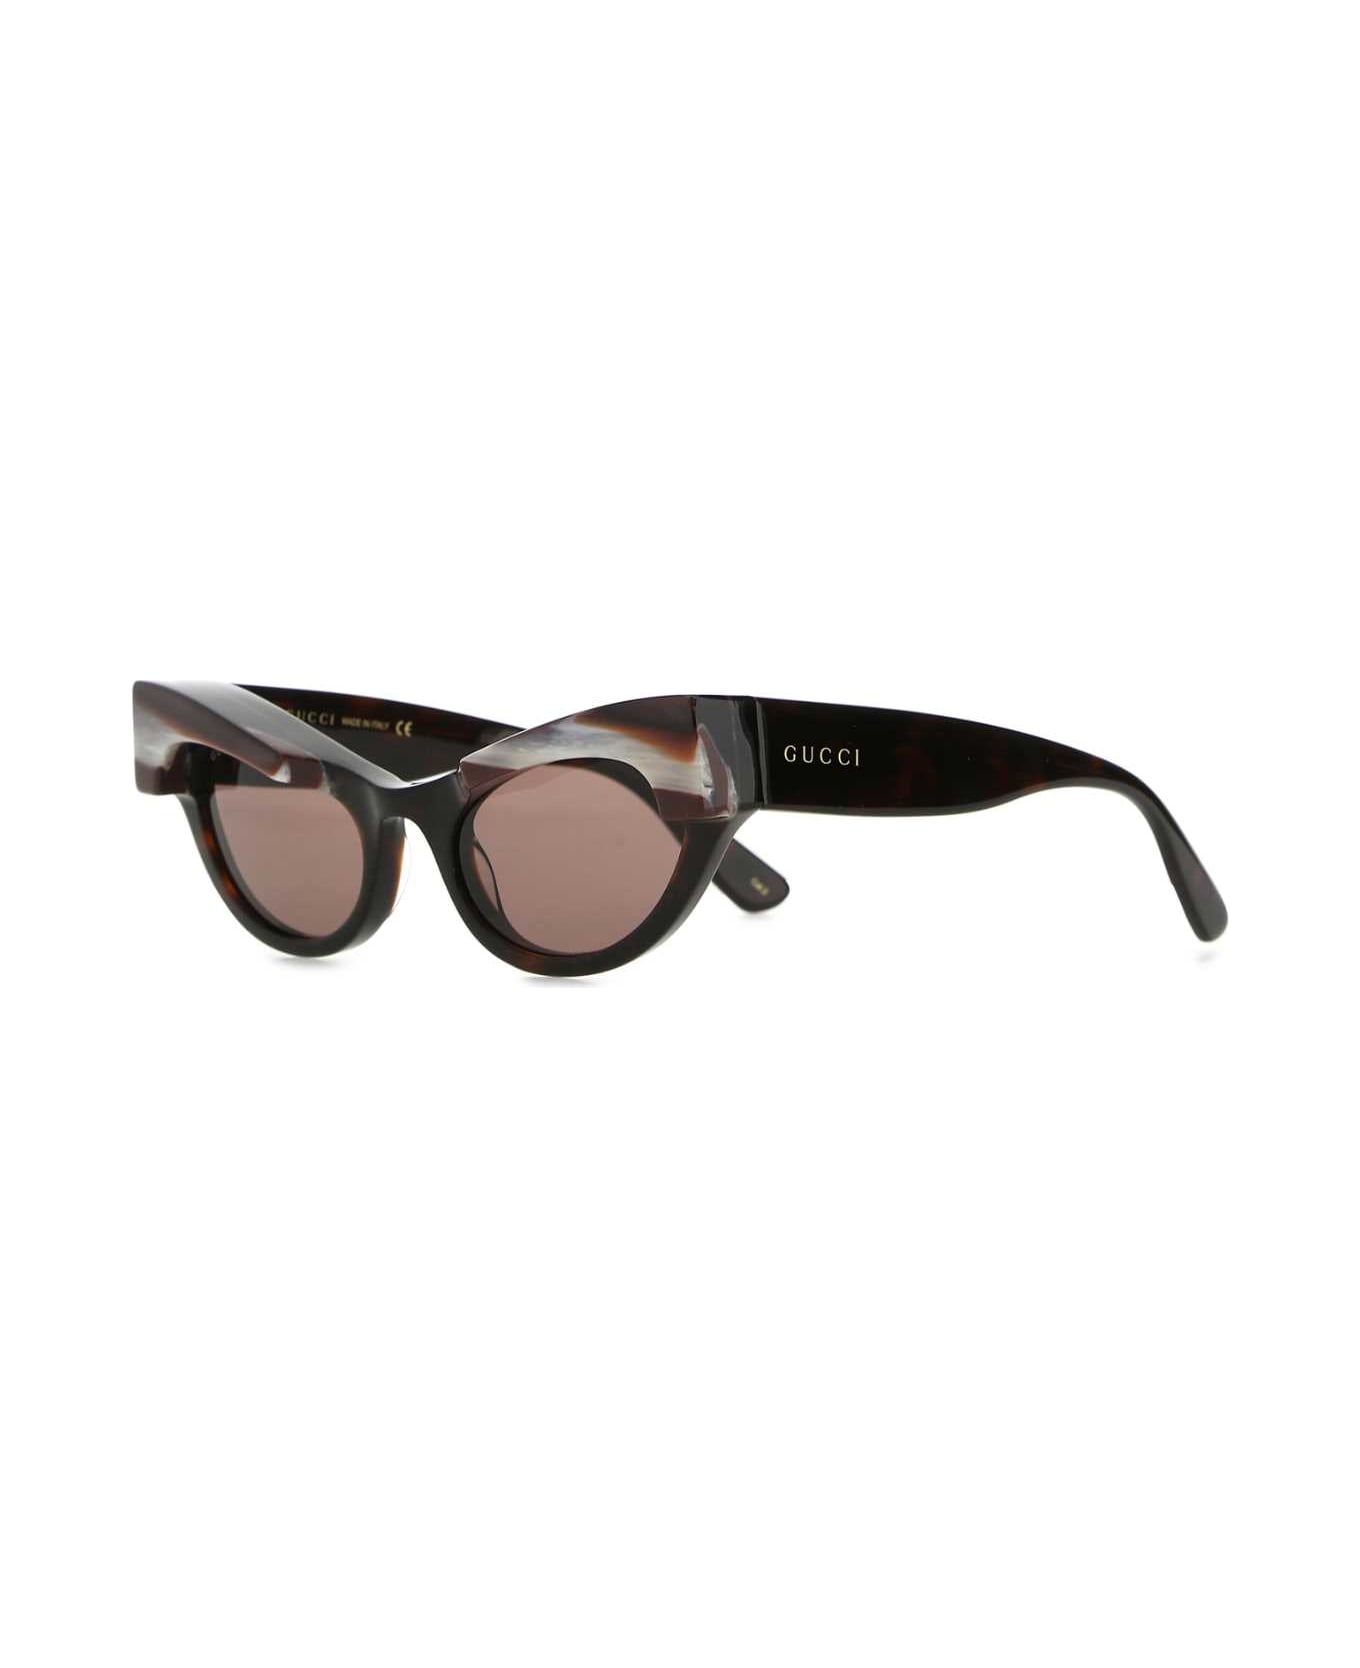 Gucci Multicolor Acetate Sunglasses - 2323 サングラス